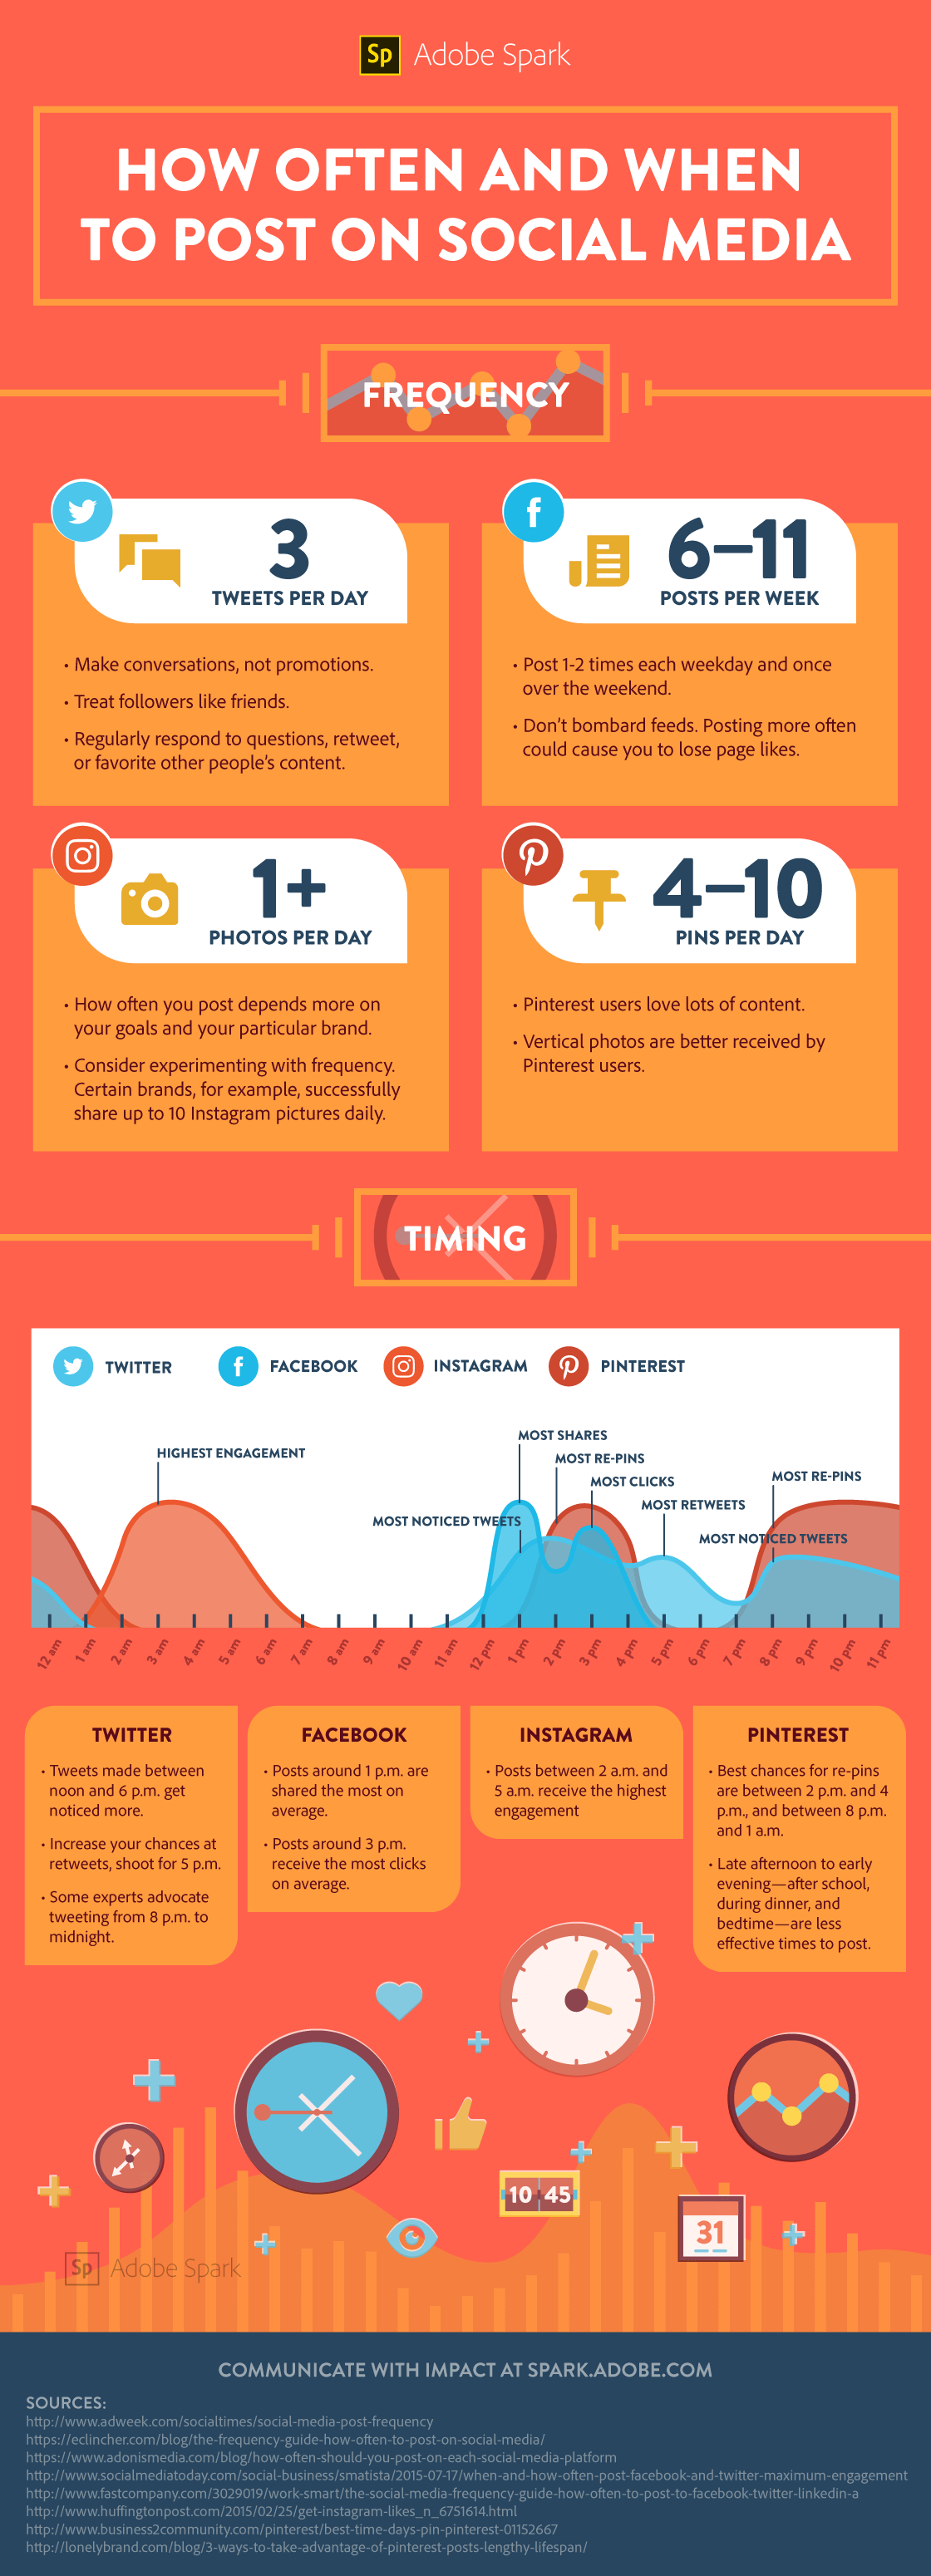 How Often To Post On Social Media - #infographic